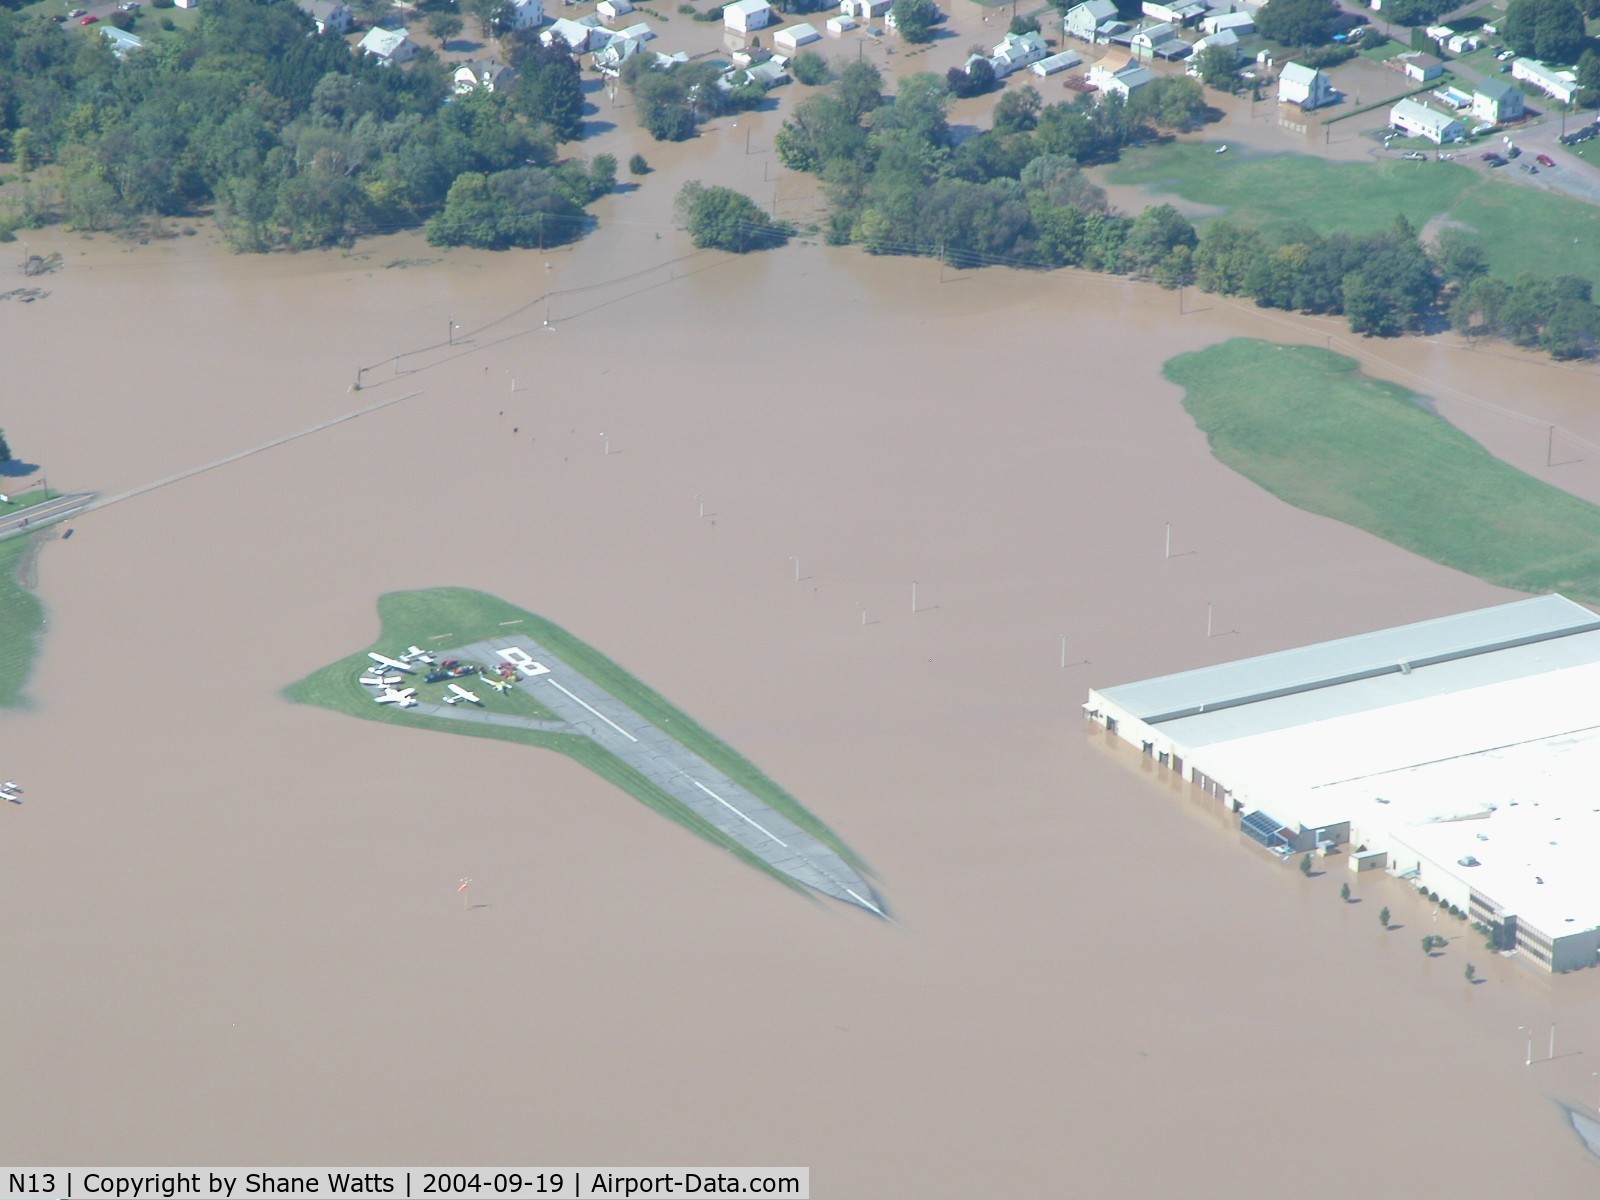 Bloomsburg Municipal Airport (N13) - Hurricane Ivan River Flood